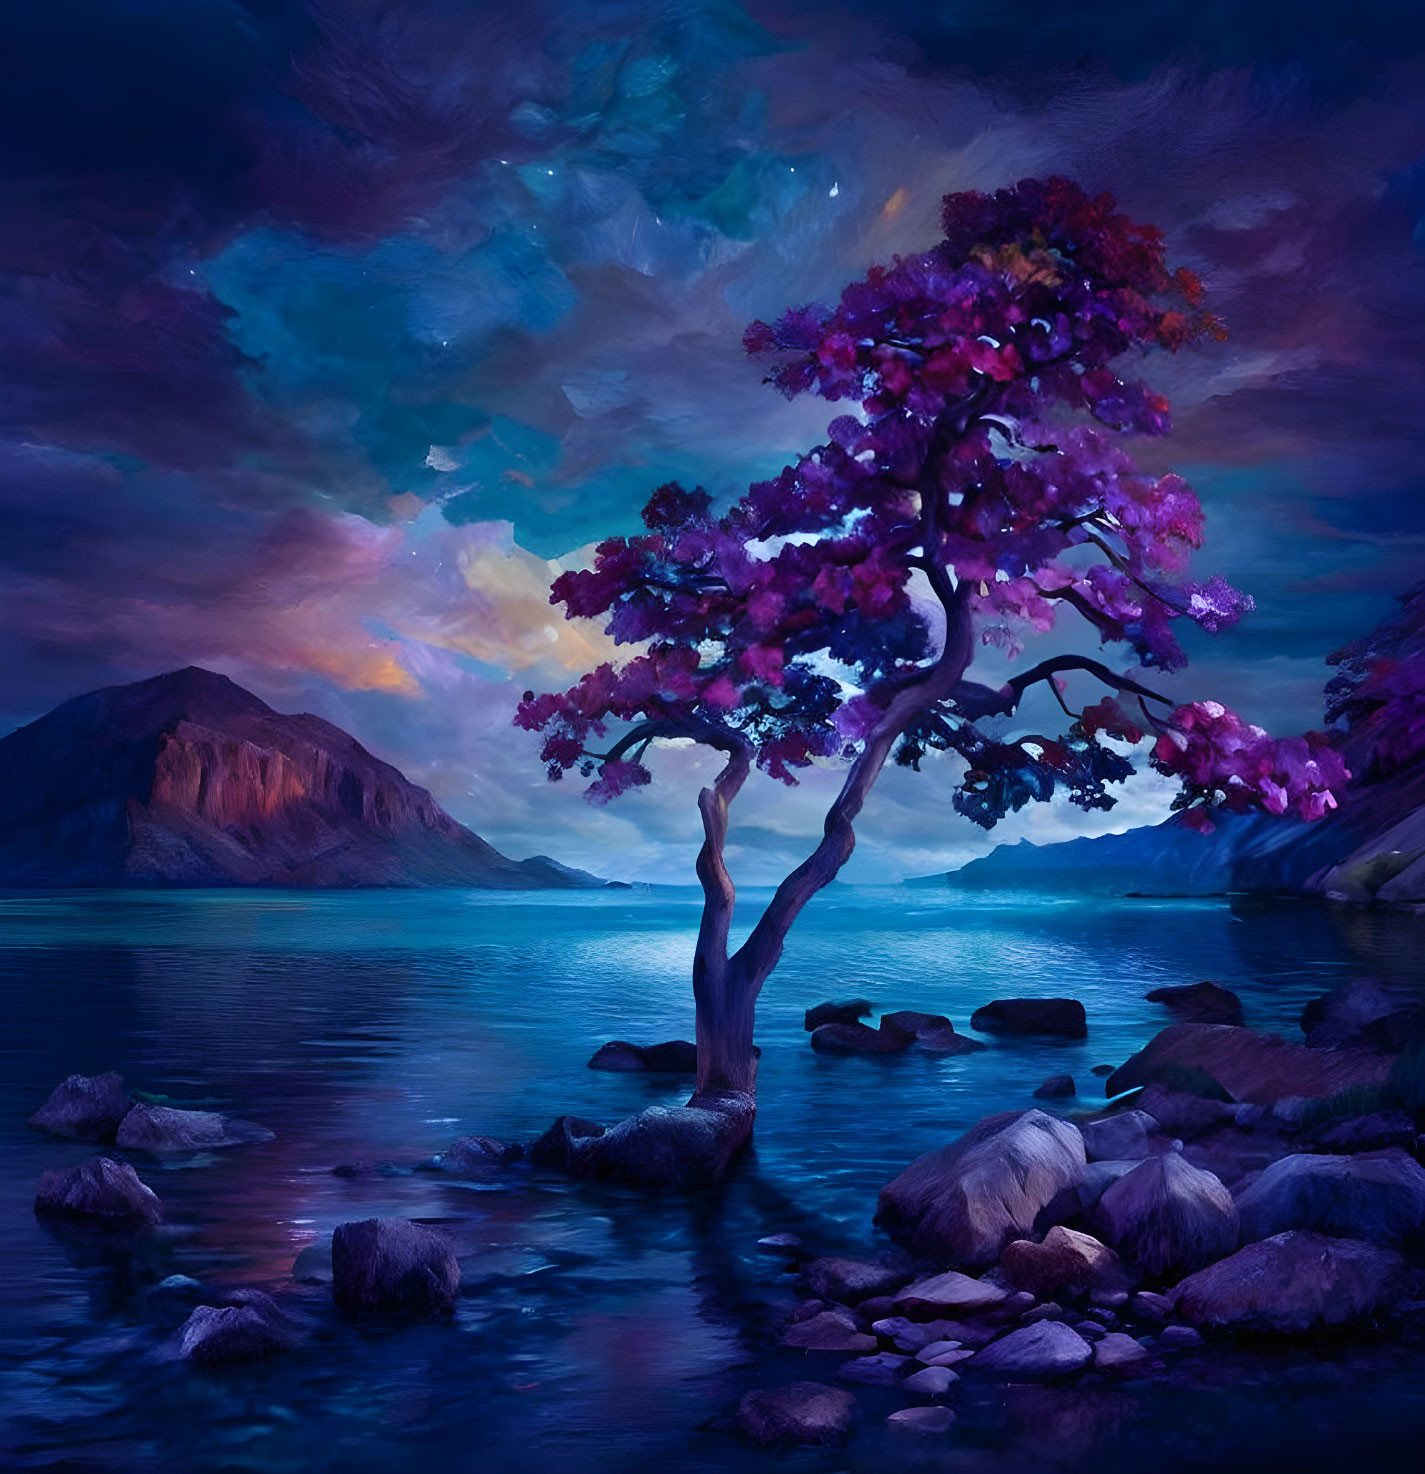 Serene lake painting: solitary tree, purple foliage, mountains, twilight sky